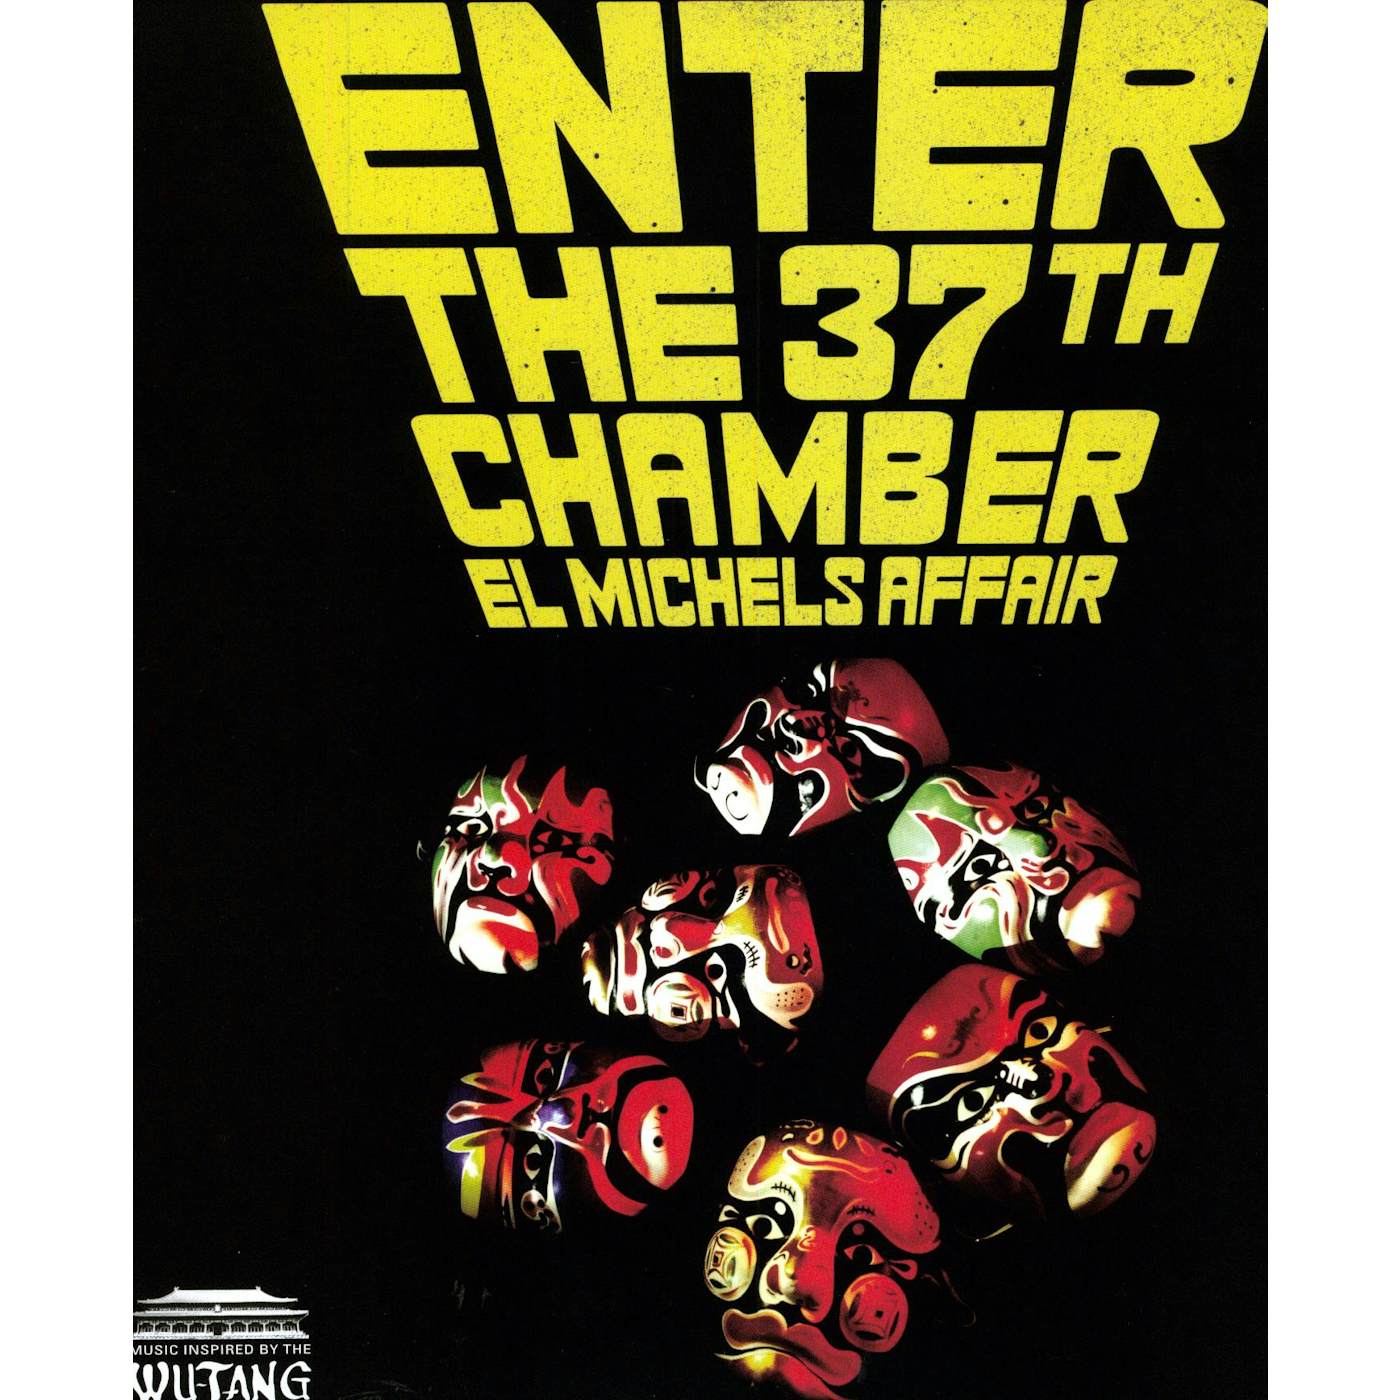 El Michels Affair Enter The 37th Chamber Vinyl Record